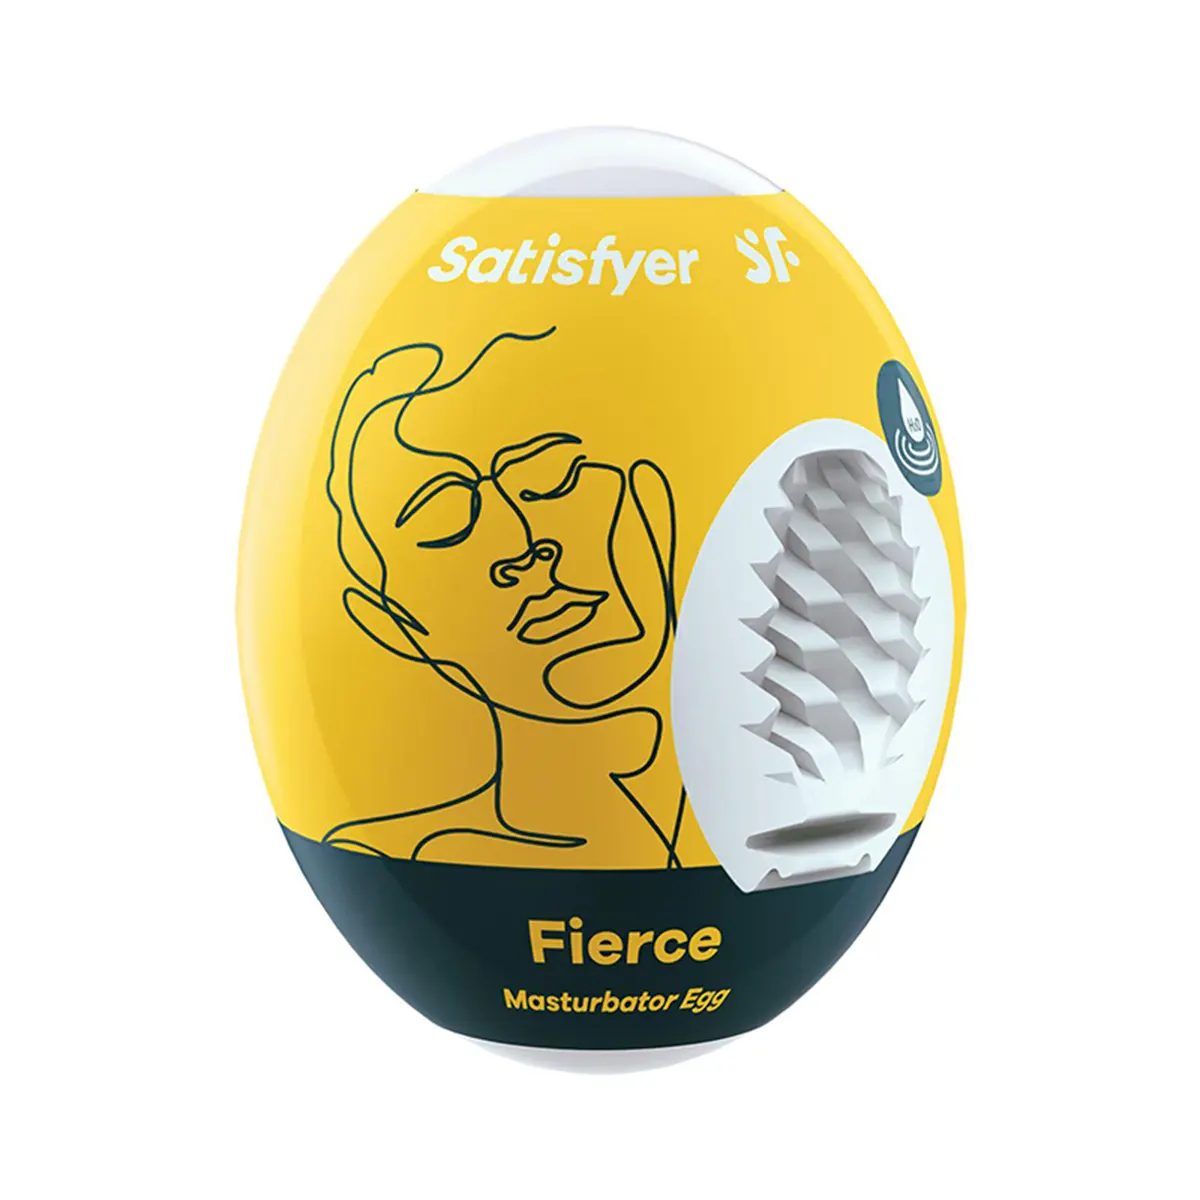 SATISFYER Masturbator Egg fierce